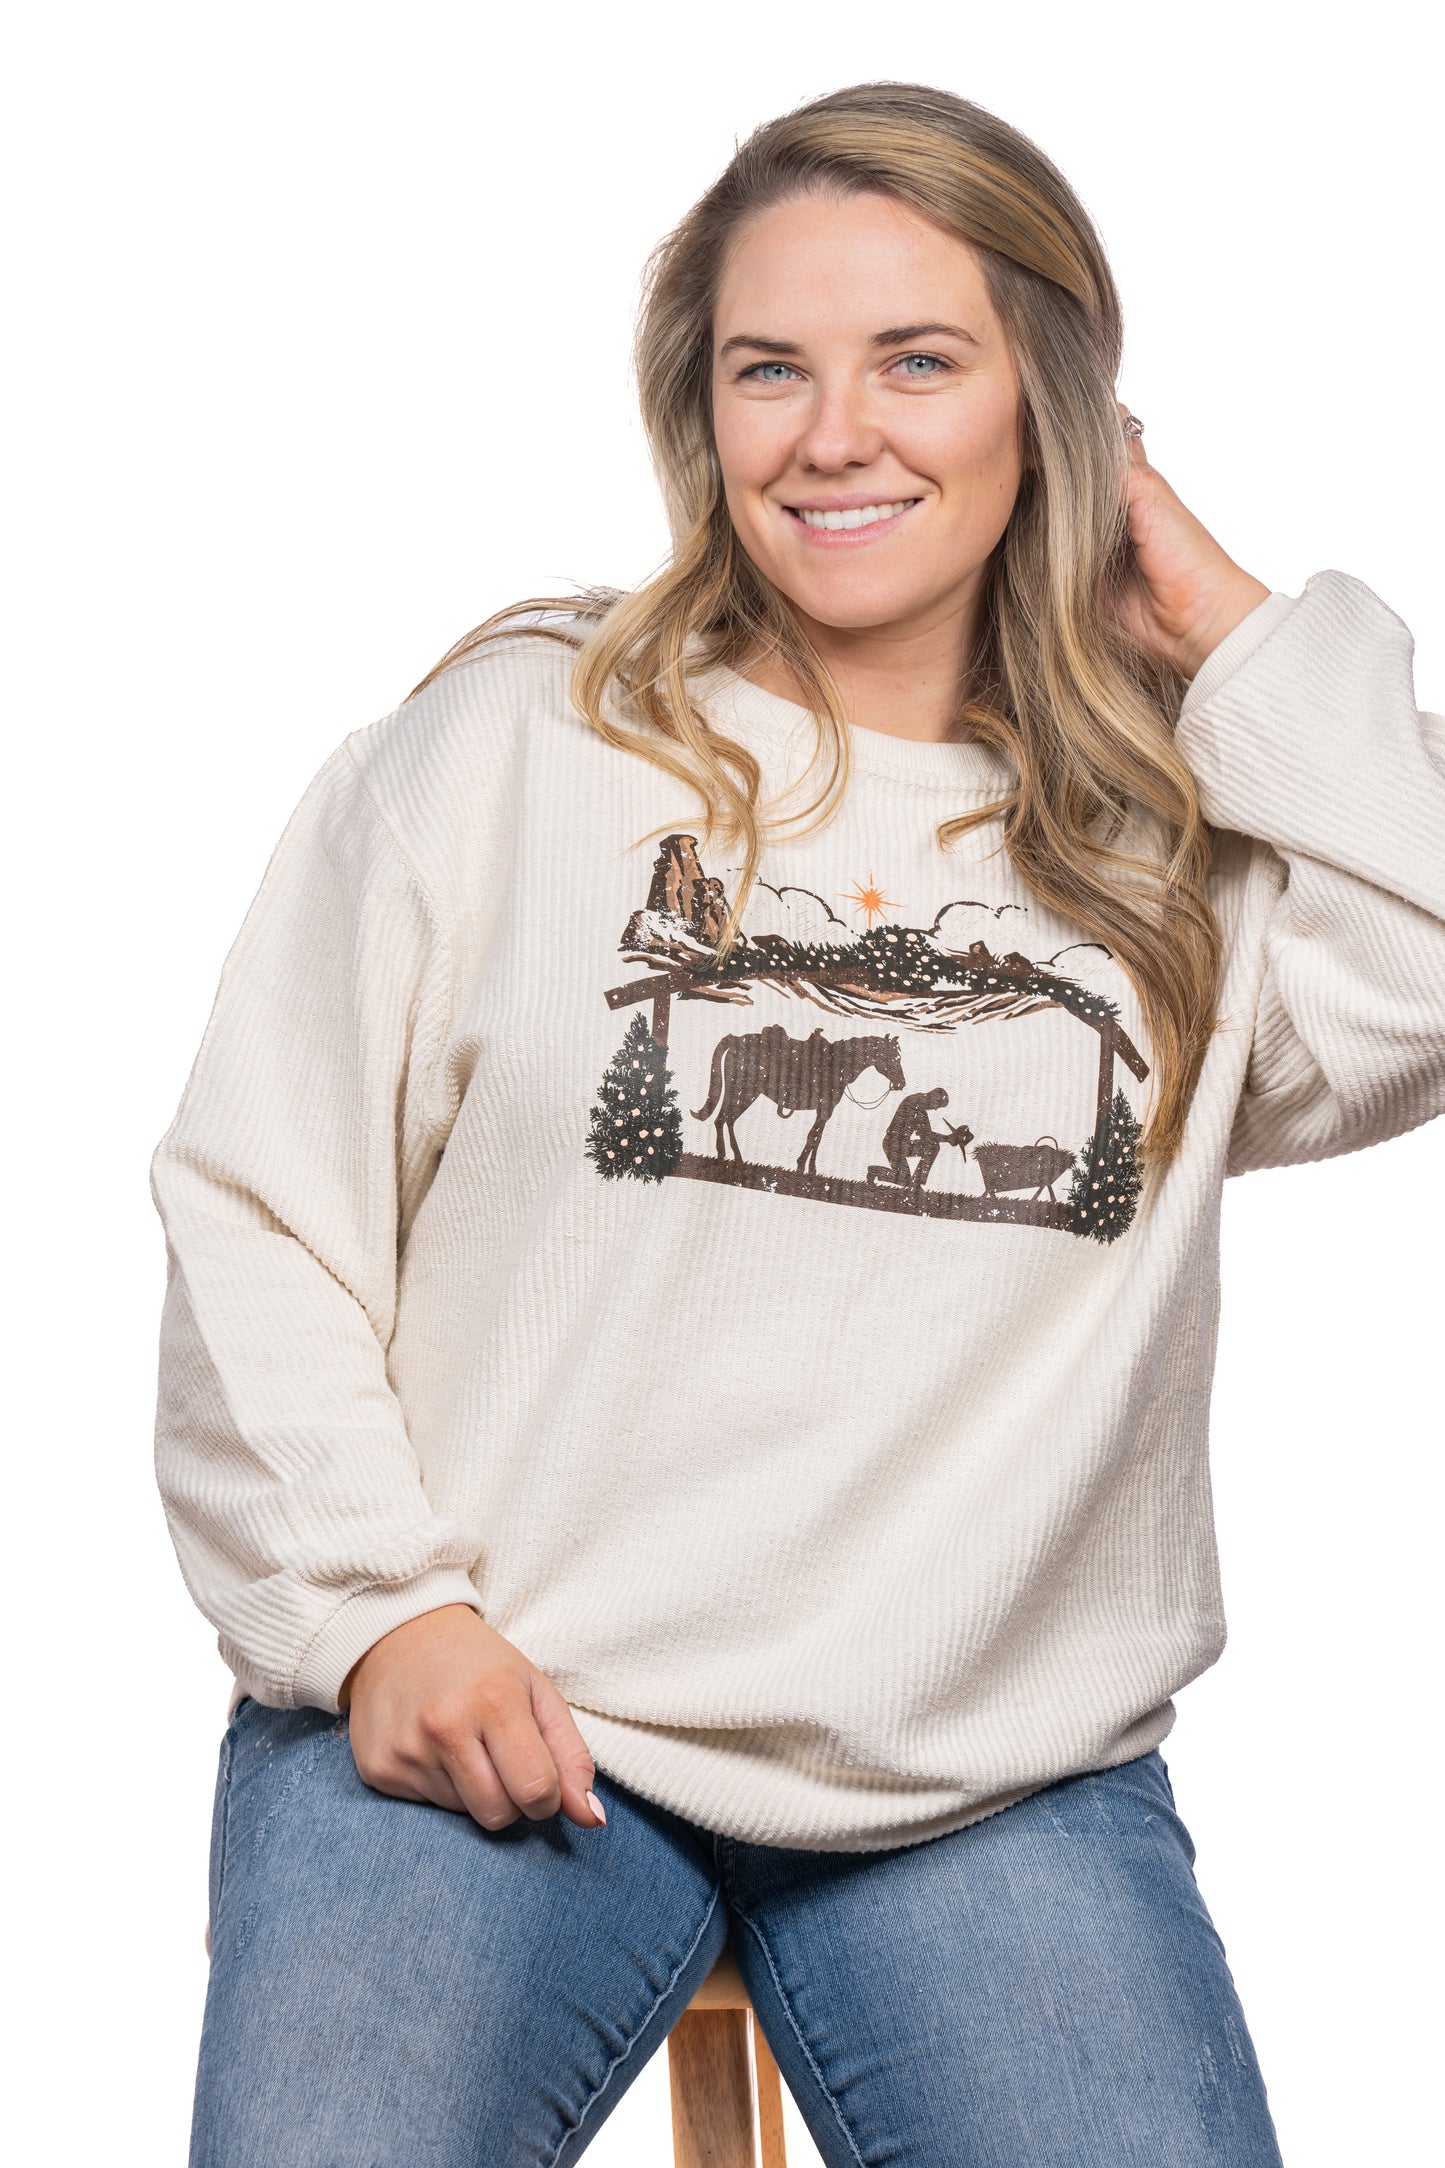 Cowboy Manger - Corded Sweatshirt (Ivory)